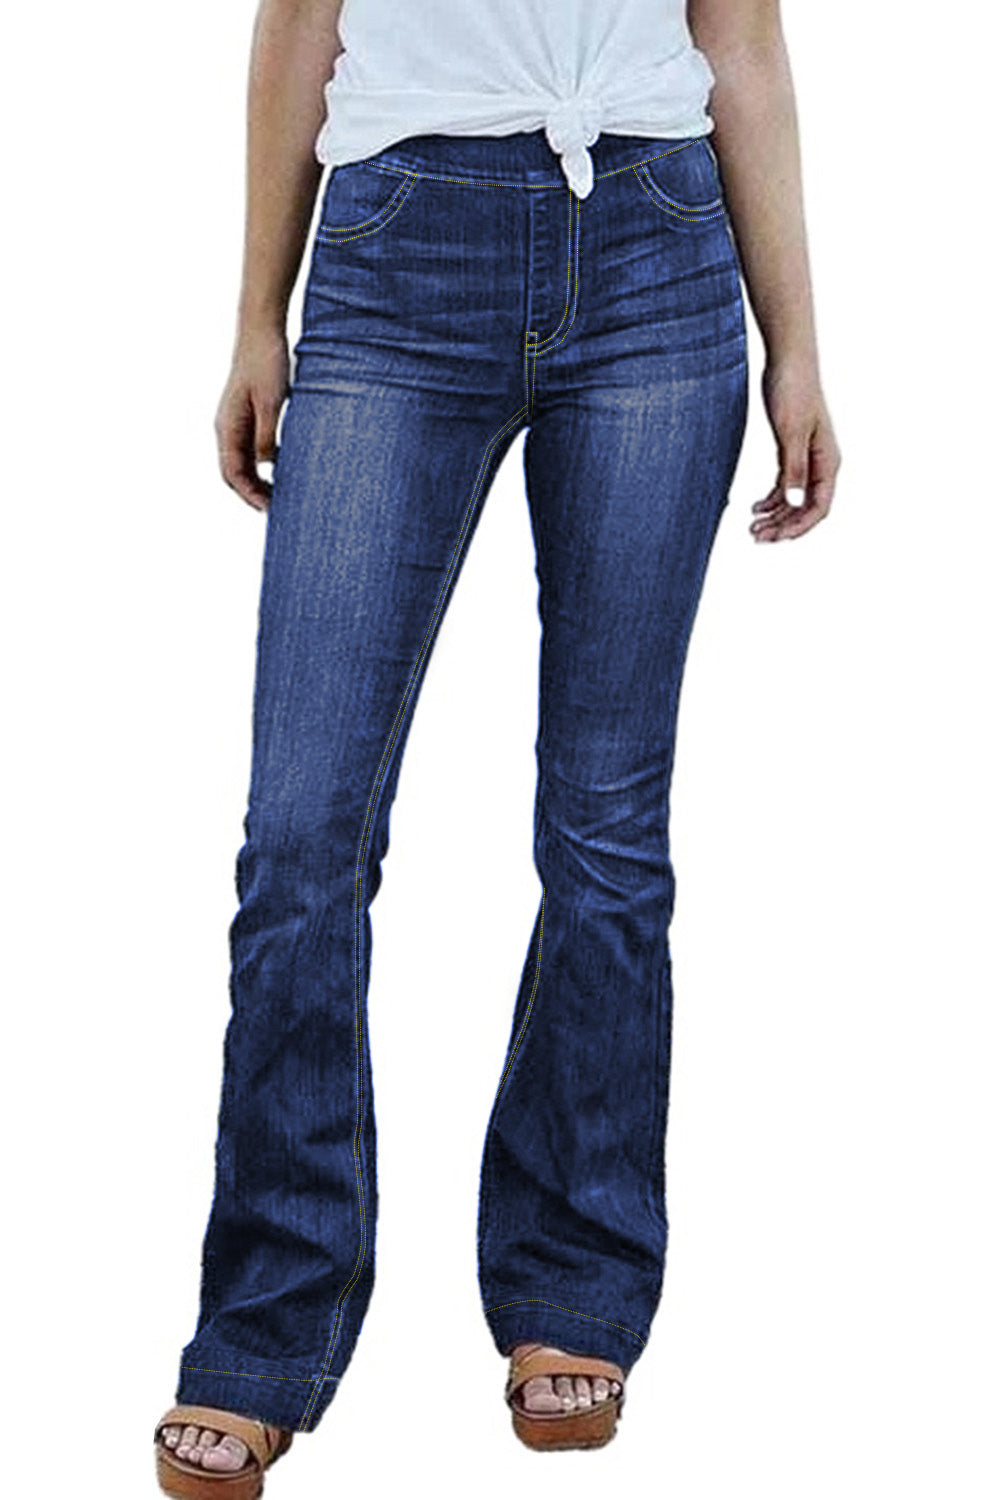 Blue High Waisted Elastic Waist Flare Jeans Bell Bottom for Women LC78866-5